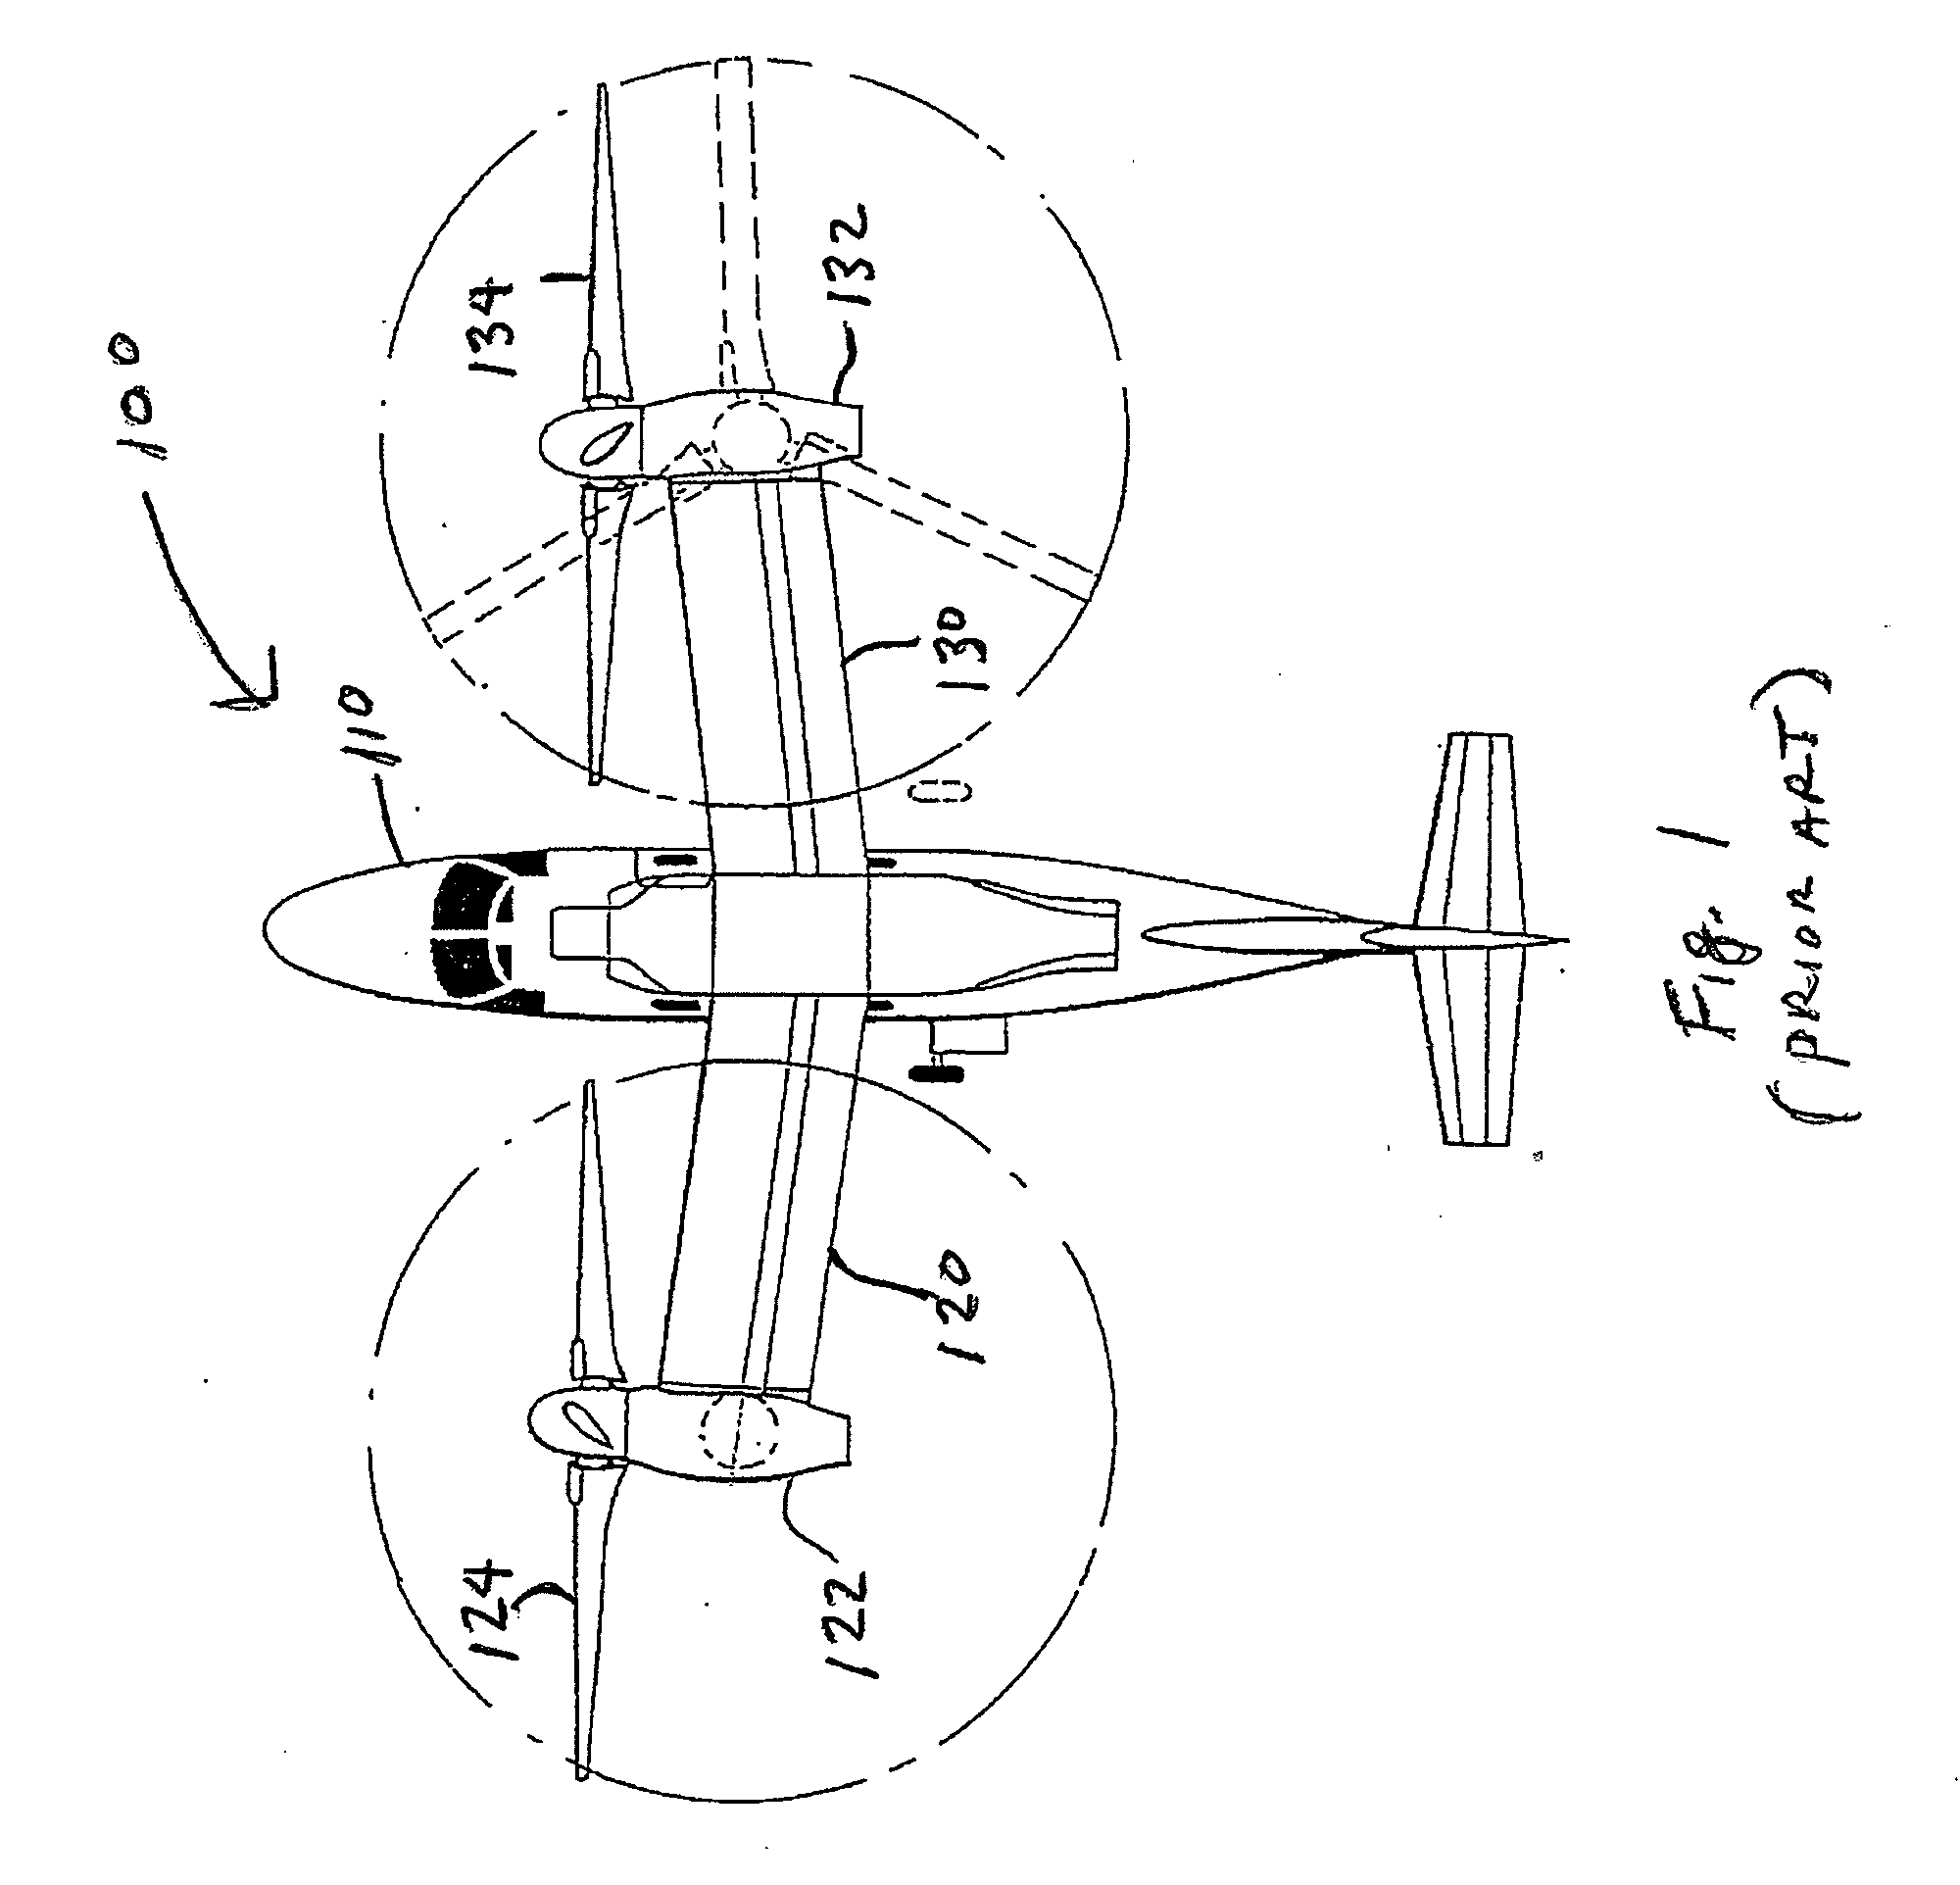 Tilt outboard wing for tilt rotor aircraft